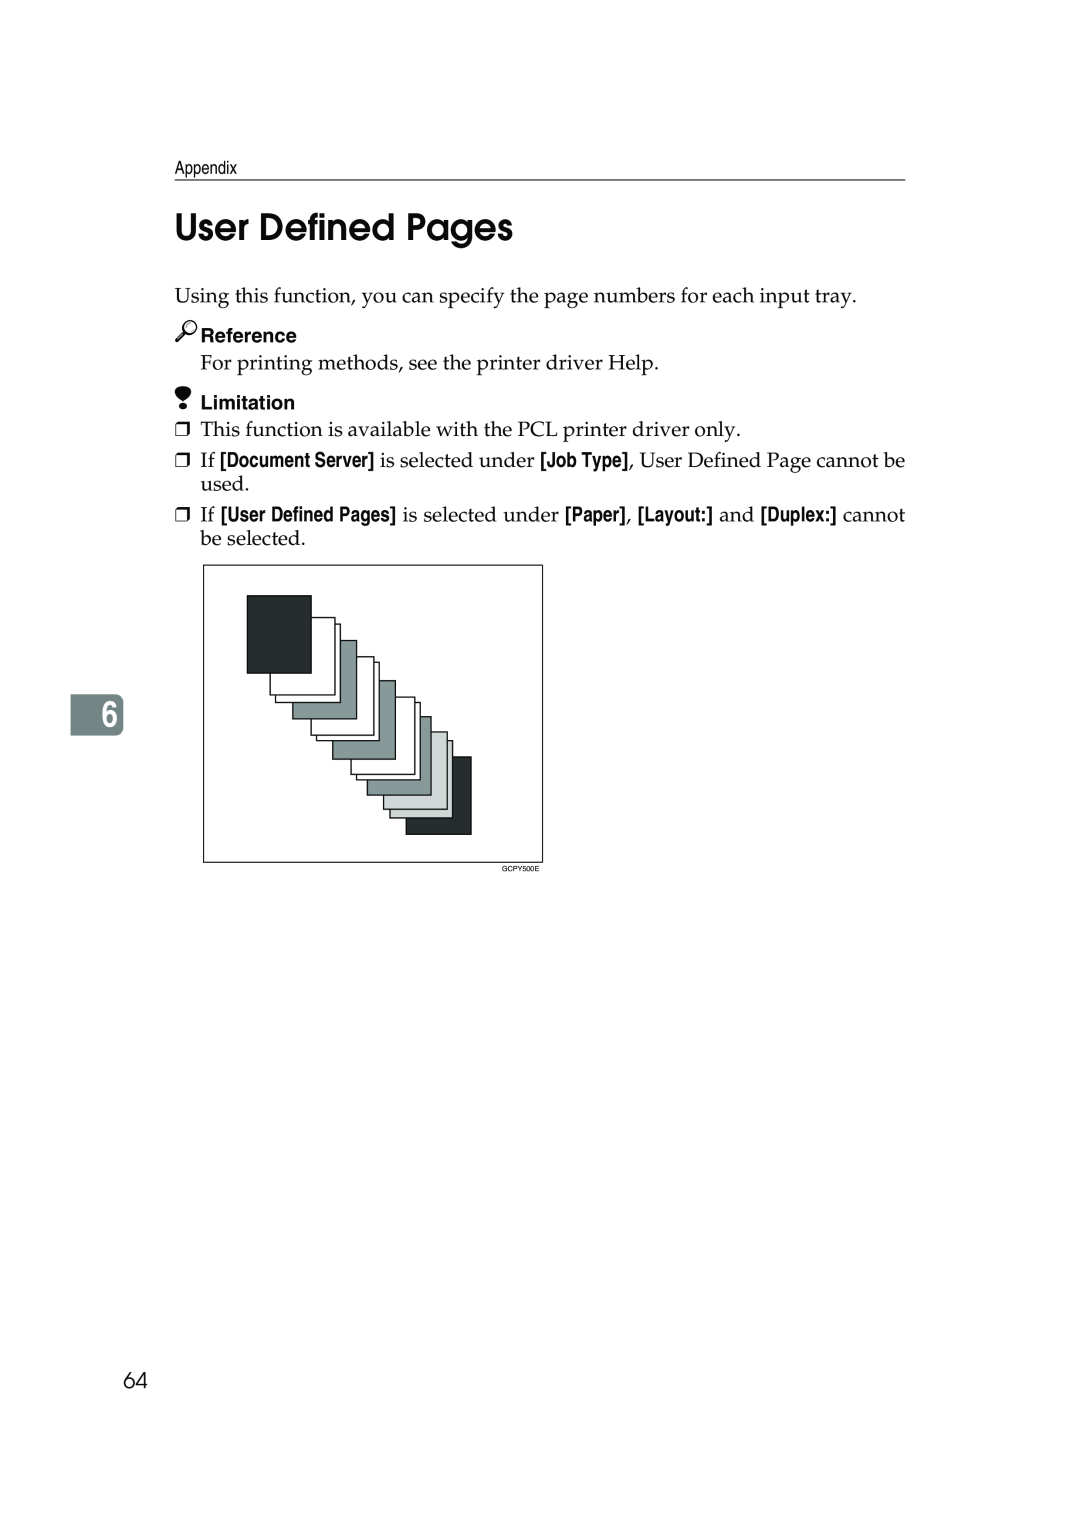 Xerox 2045e appendix User Defined Pages, Reference, Limitation, GCPY500E 